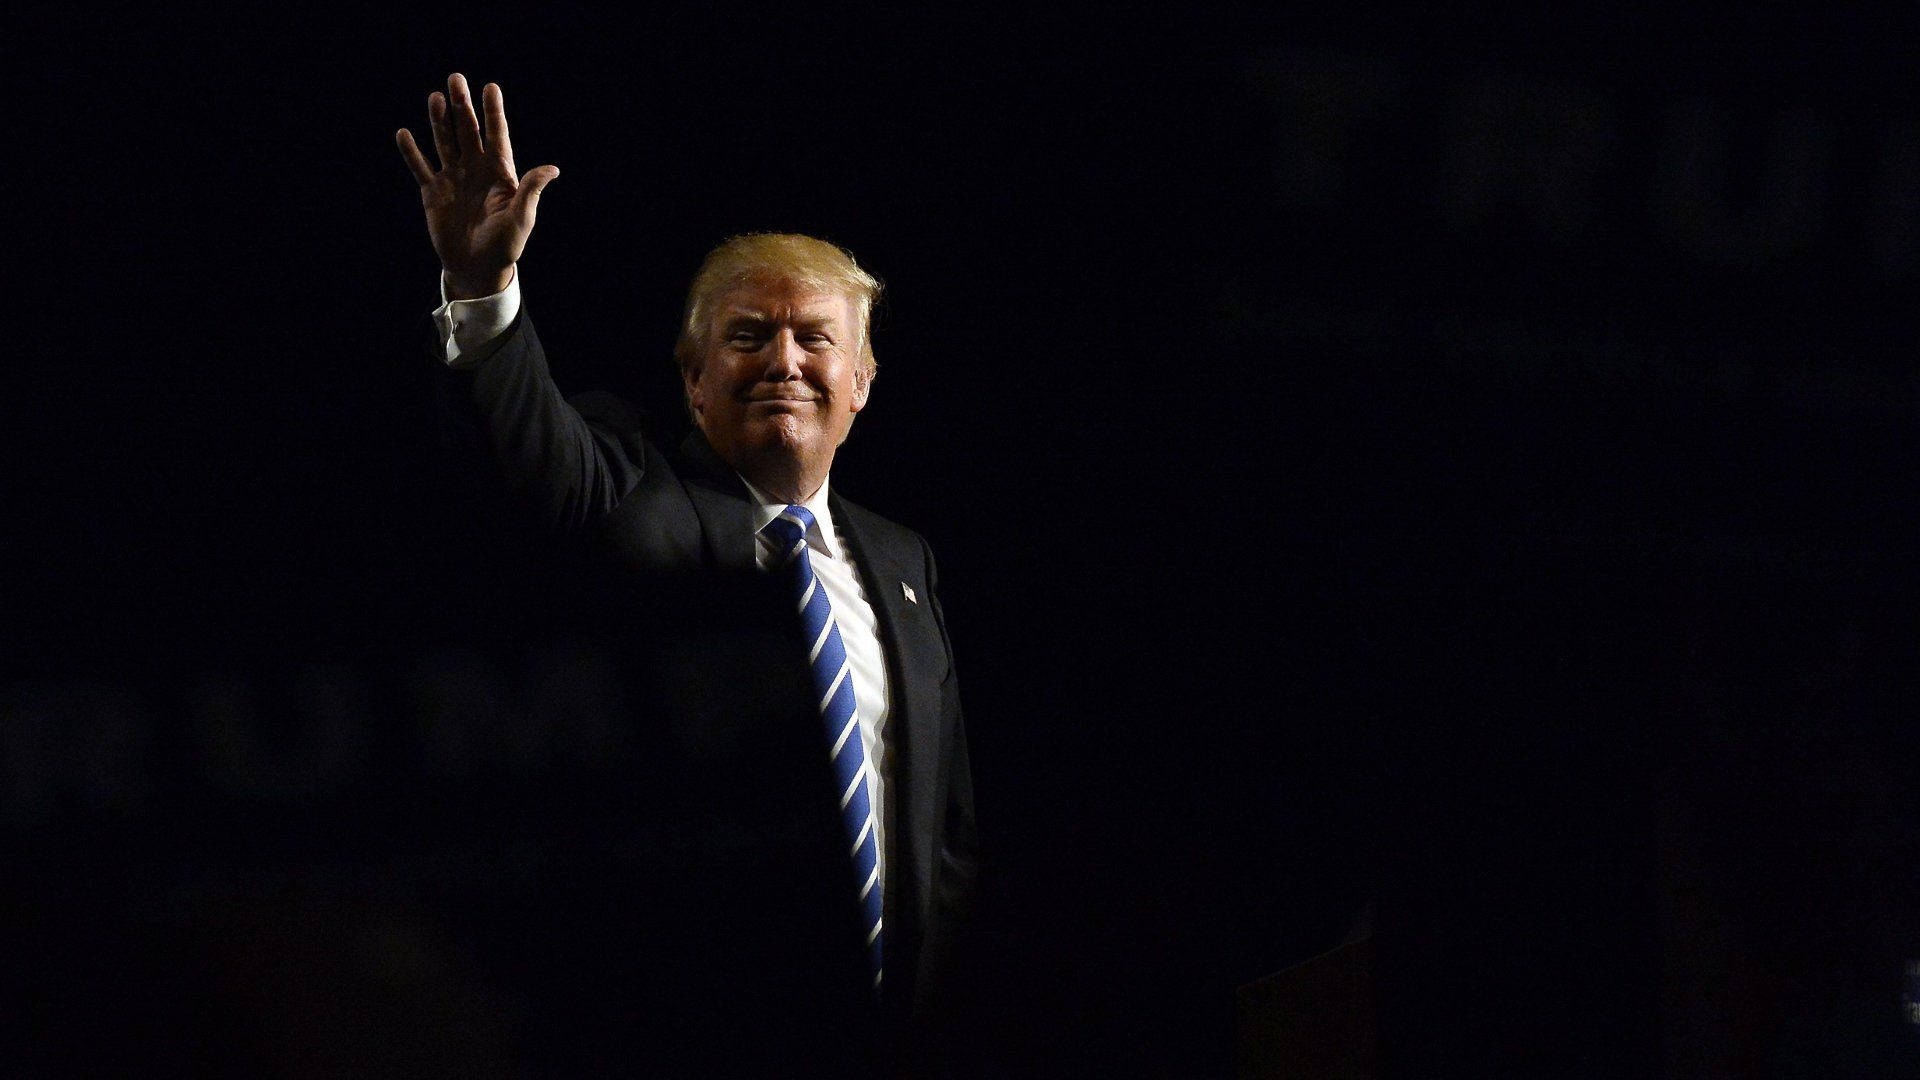 President Donald Trump Waving at a Crowd Wallpaper